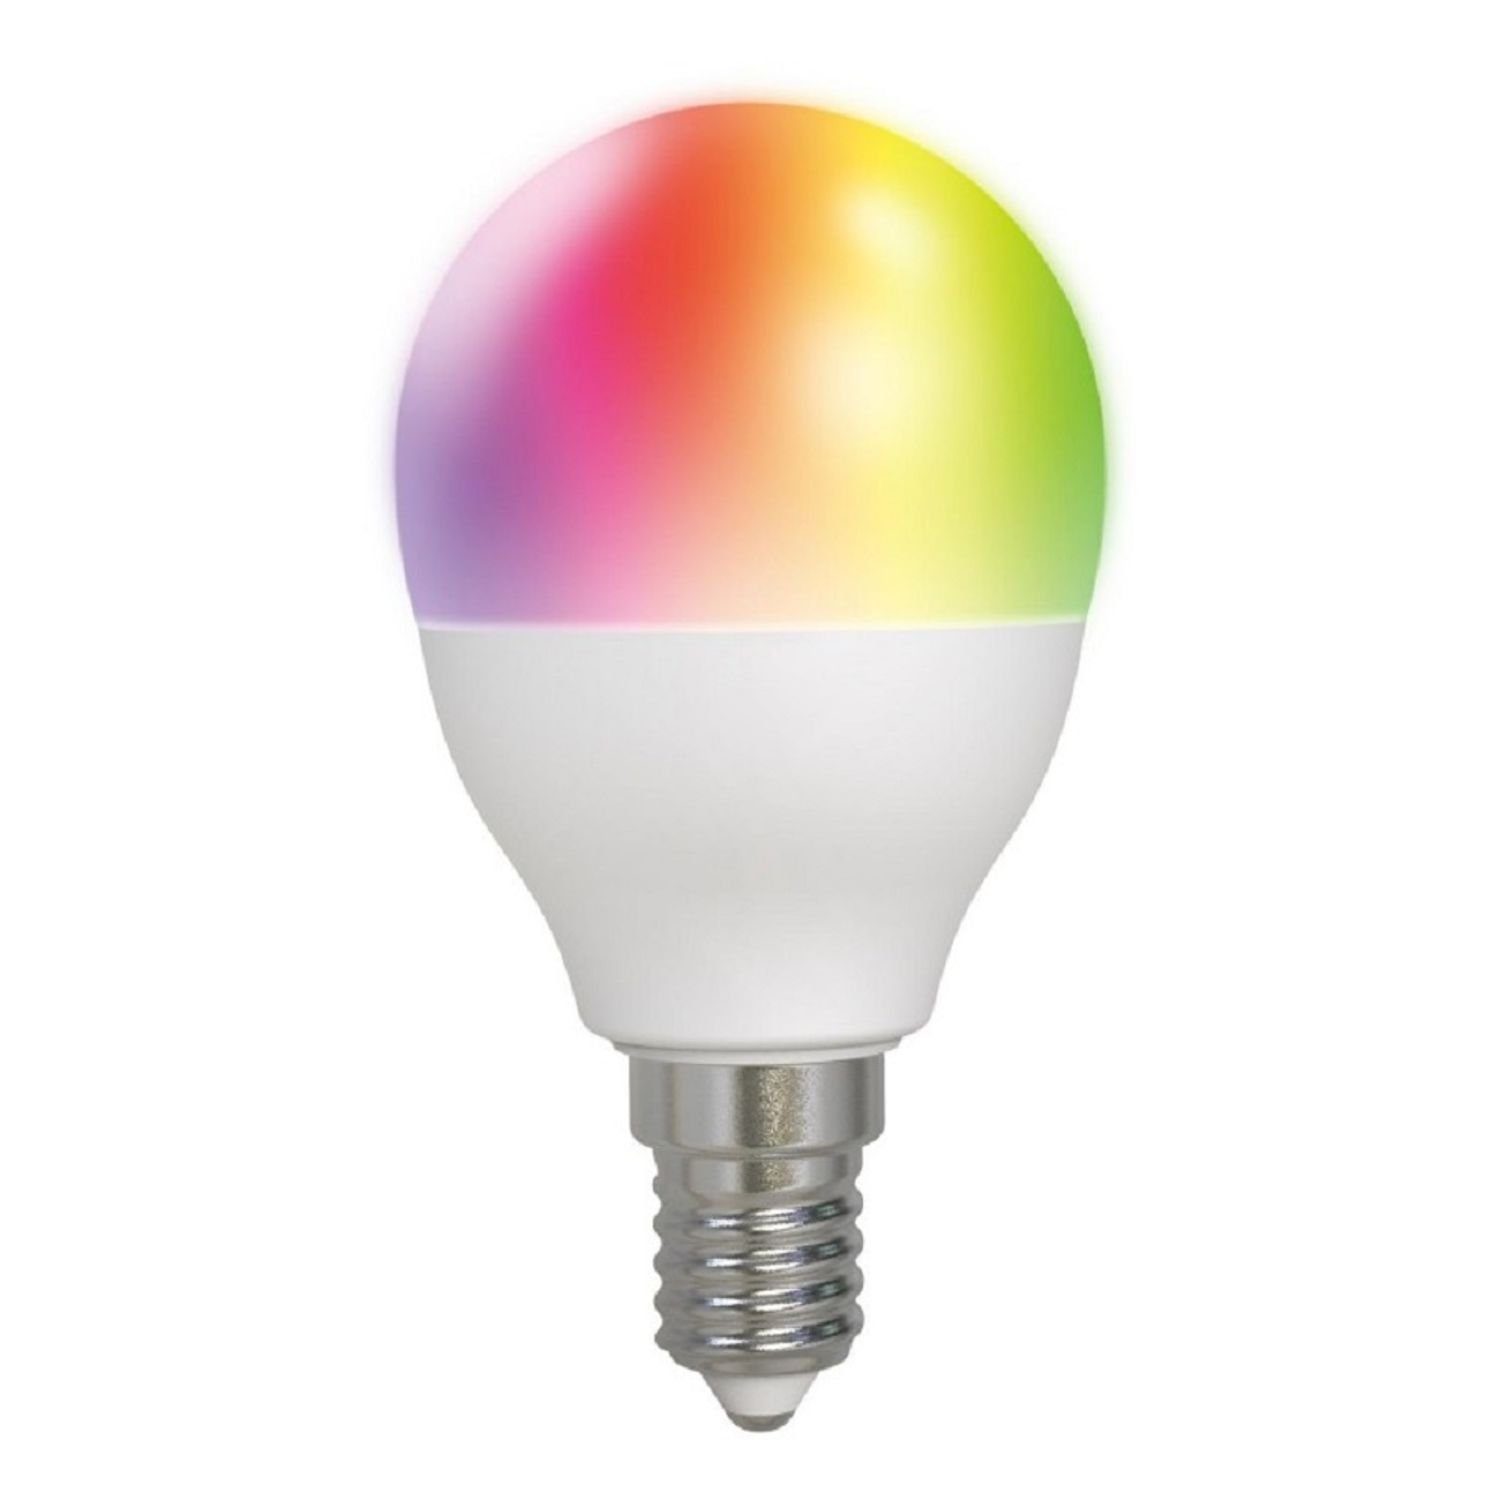 DELTACO SMART HOME LED-Leuchtmittel SH-LE14G45RGB 5 Jahre Herstellergarantie LED E14-Sockel inkl. dimmbar für RGB, Birne Smarte 5W E14